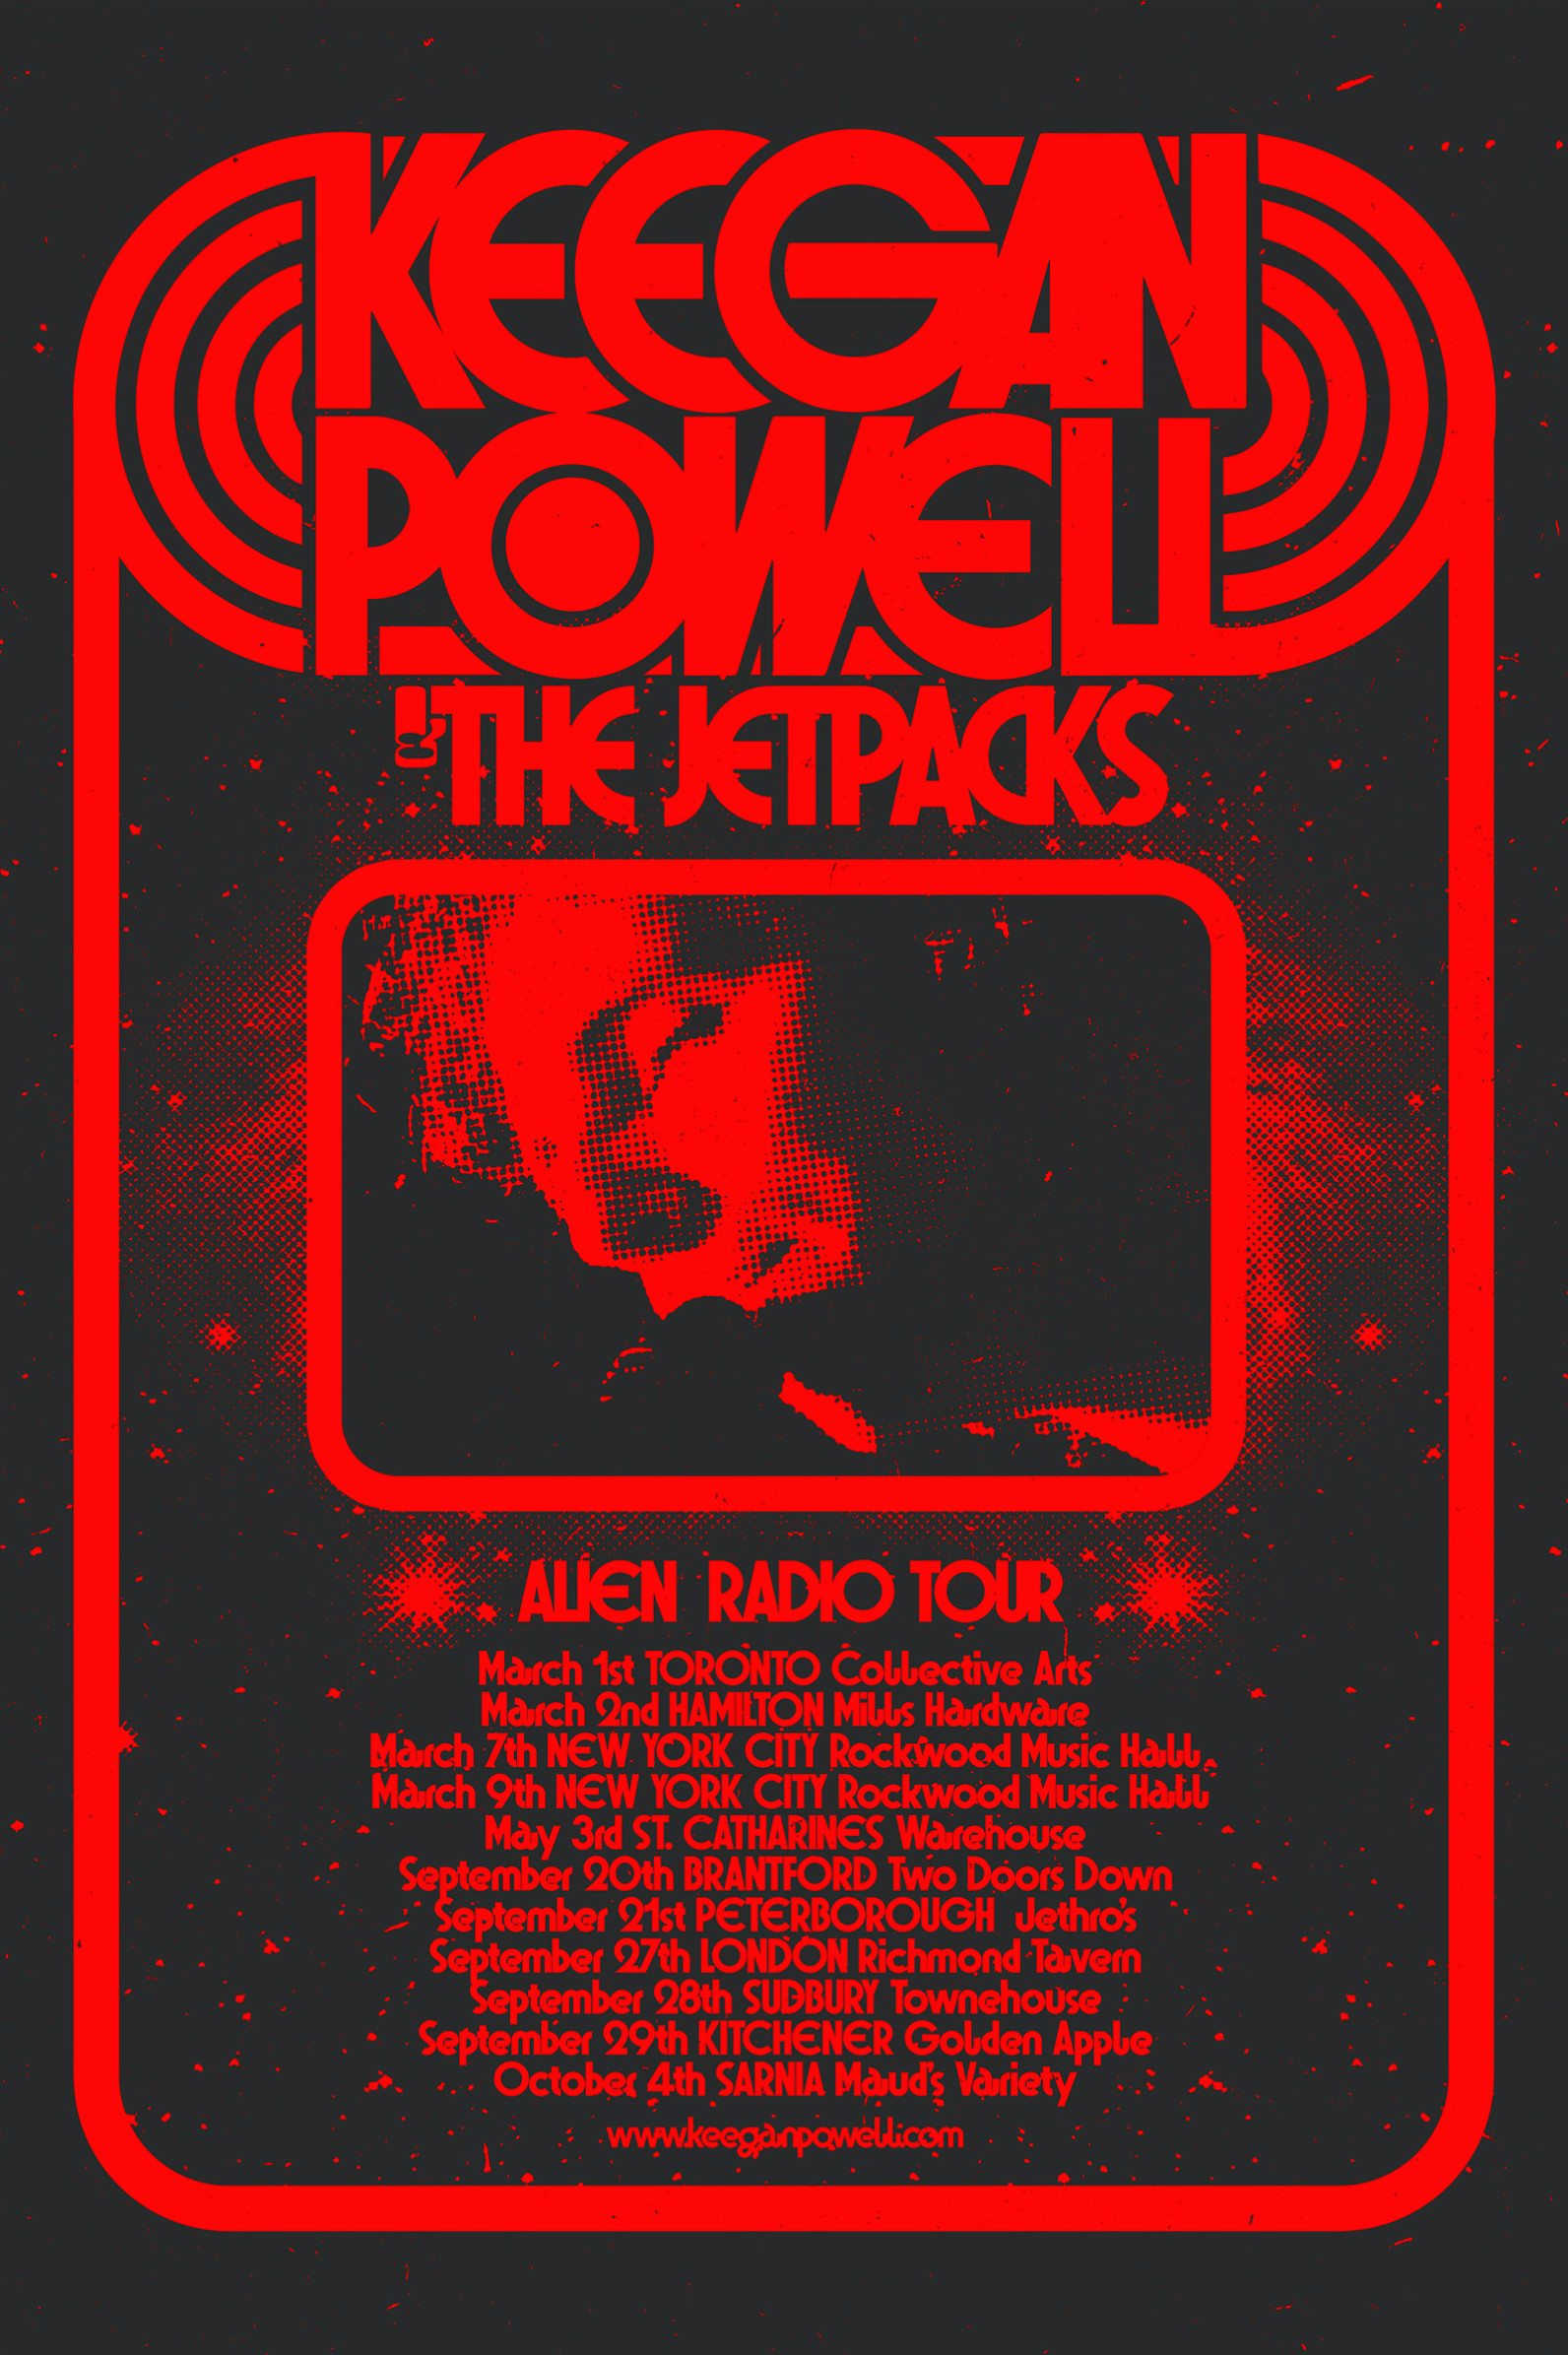 Keegan Powell & The Jetpacks, Alien Radio Tour poster.